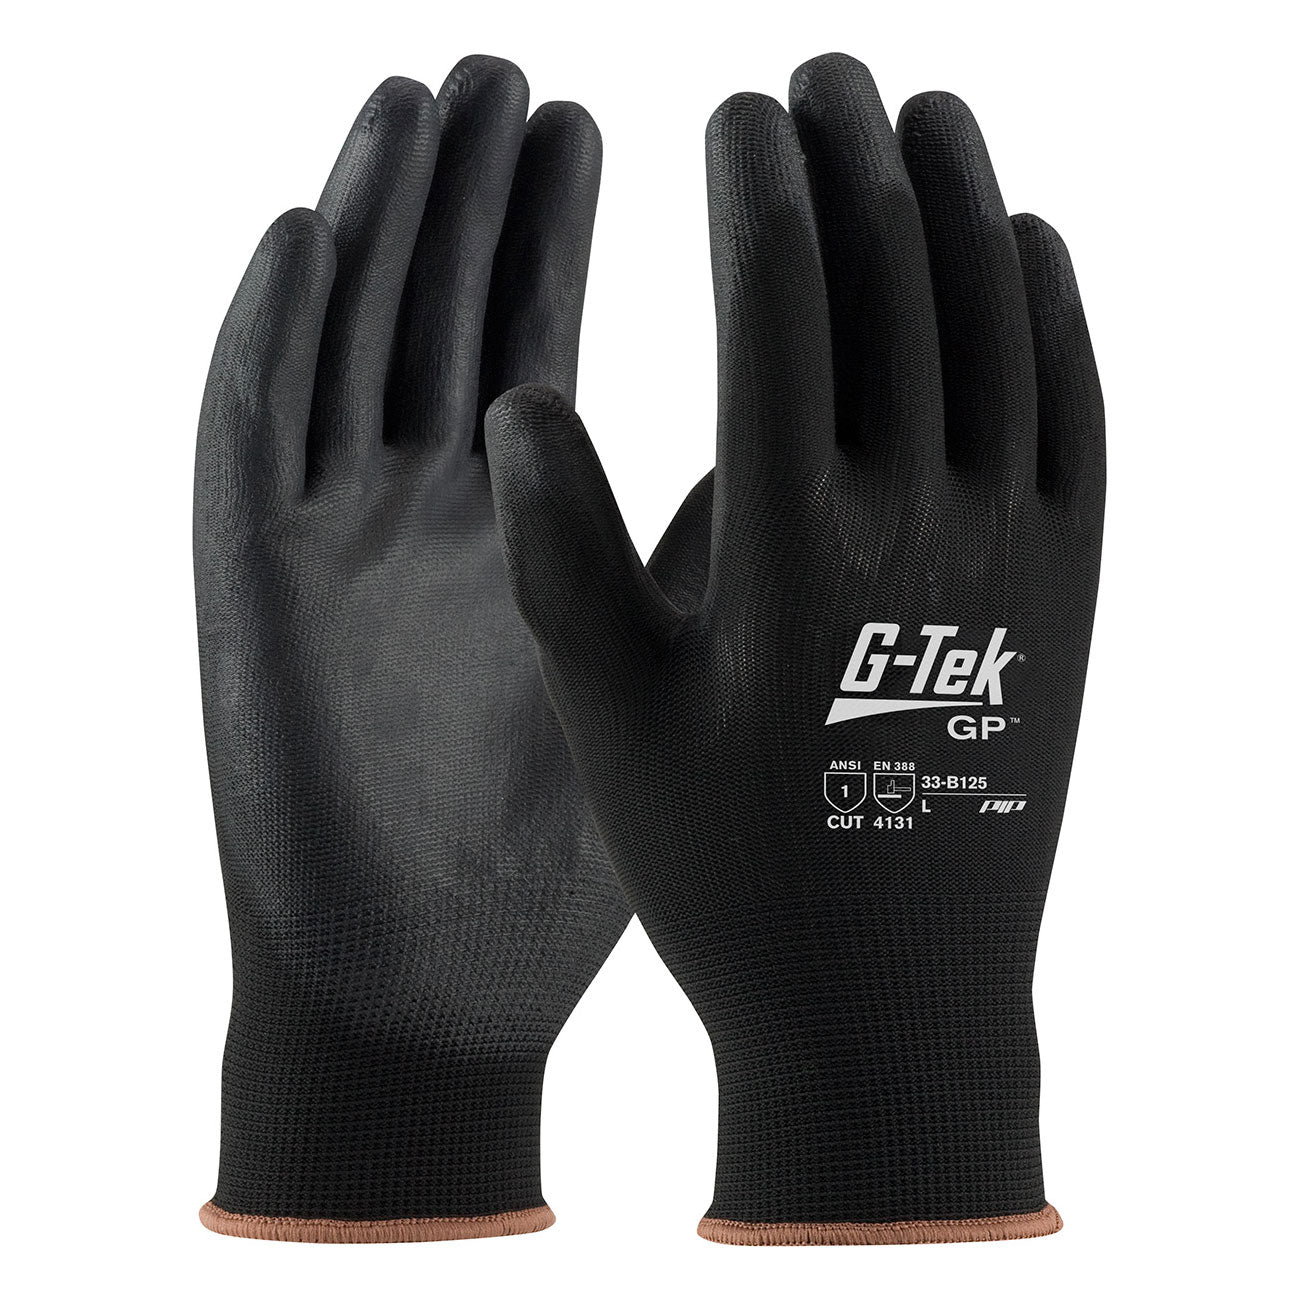 PIP 33-B125 G-Tek GP Seamless Knit Nylon Gloves - Polyurethane Coated Smooth Grip (12 Pairs)